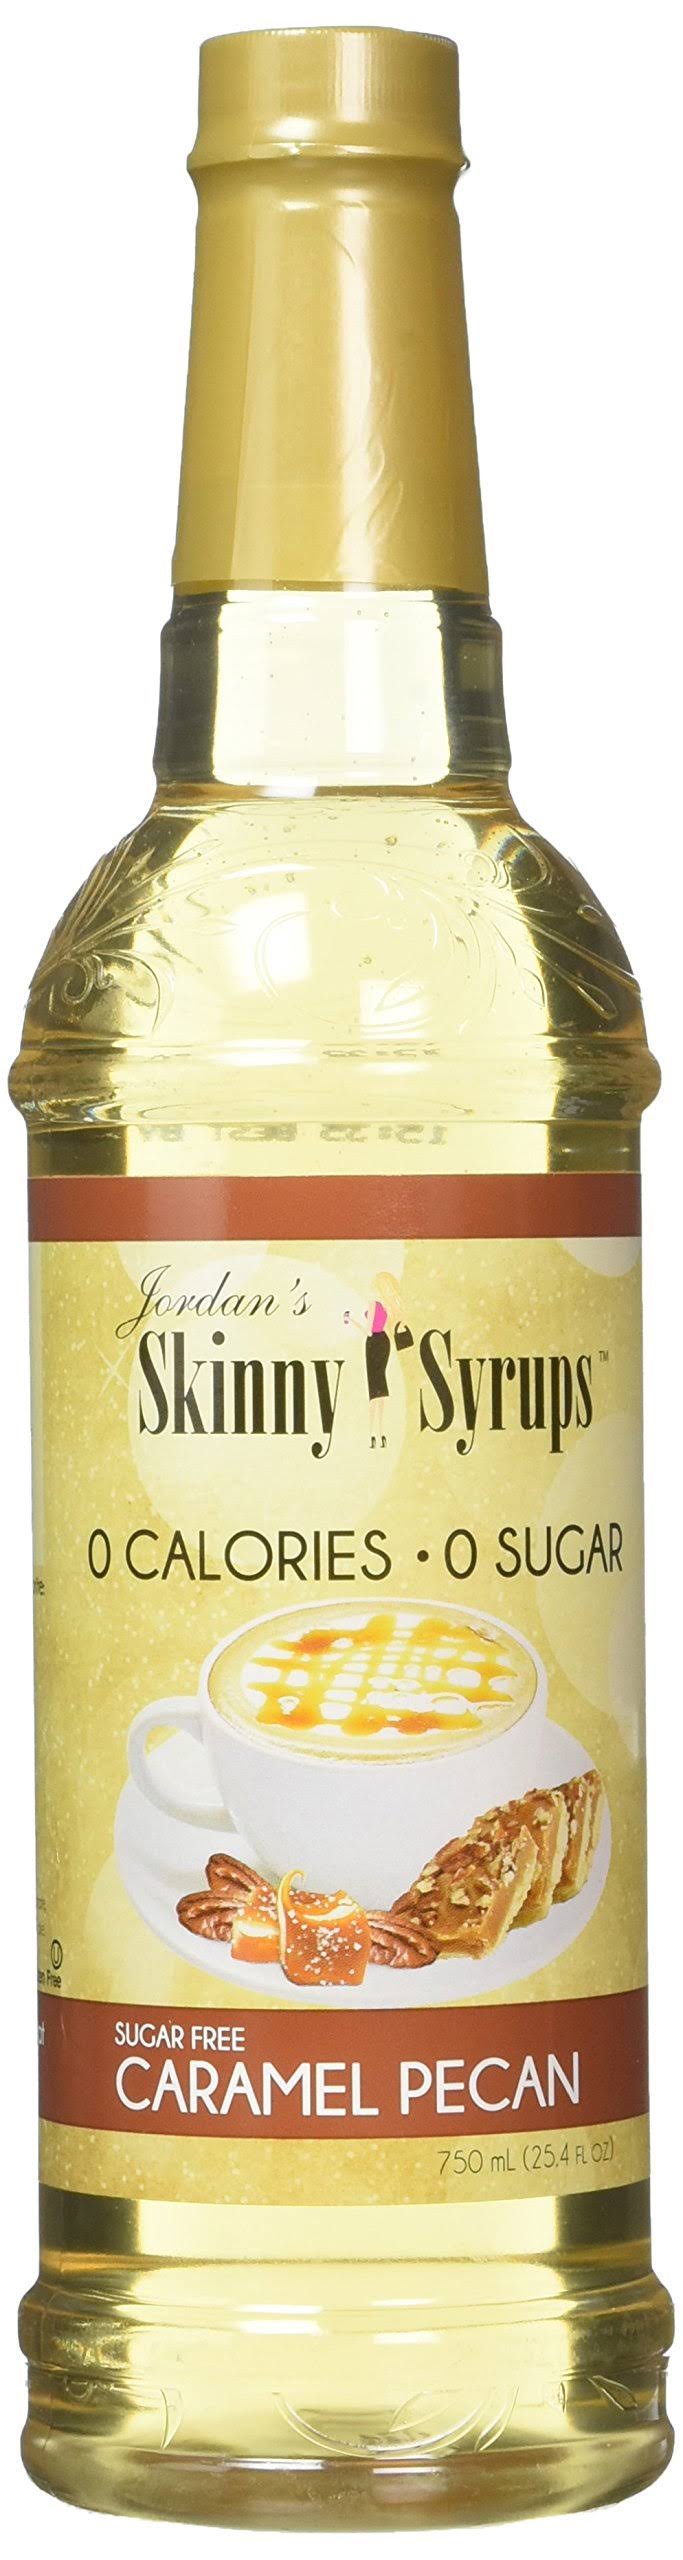 Jordan's Skinny Syrups Sugar Free - Caramel Pecan, 25.4oz